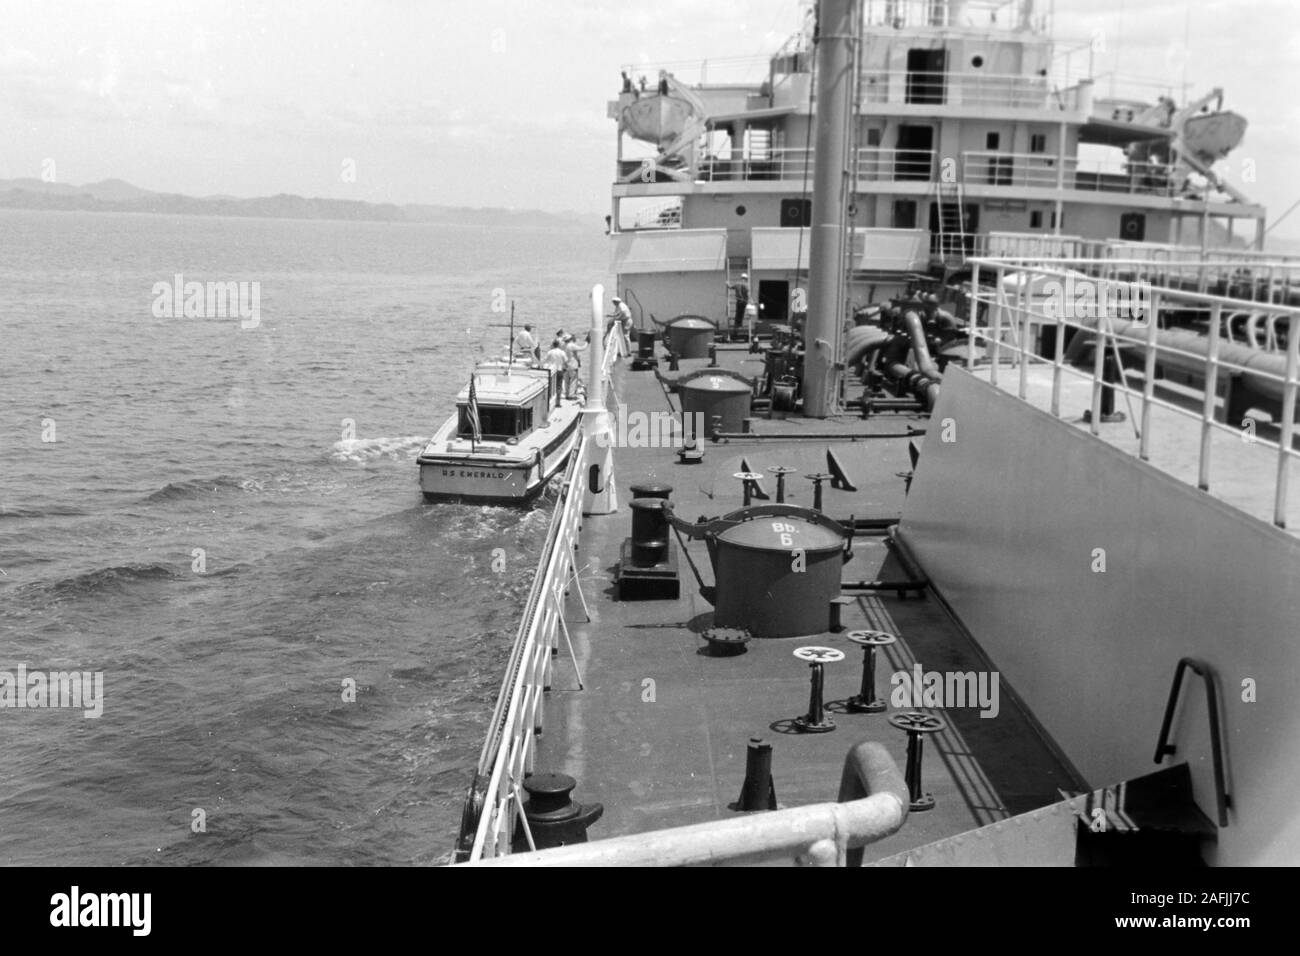 Lotsenboot auf dem Weg zum Einsatz vor dem Panamakanal, Panama 1955. Pilot cutter on its way to work near the Panama Canal, Panama 1955. Stock Photo